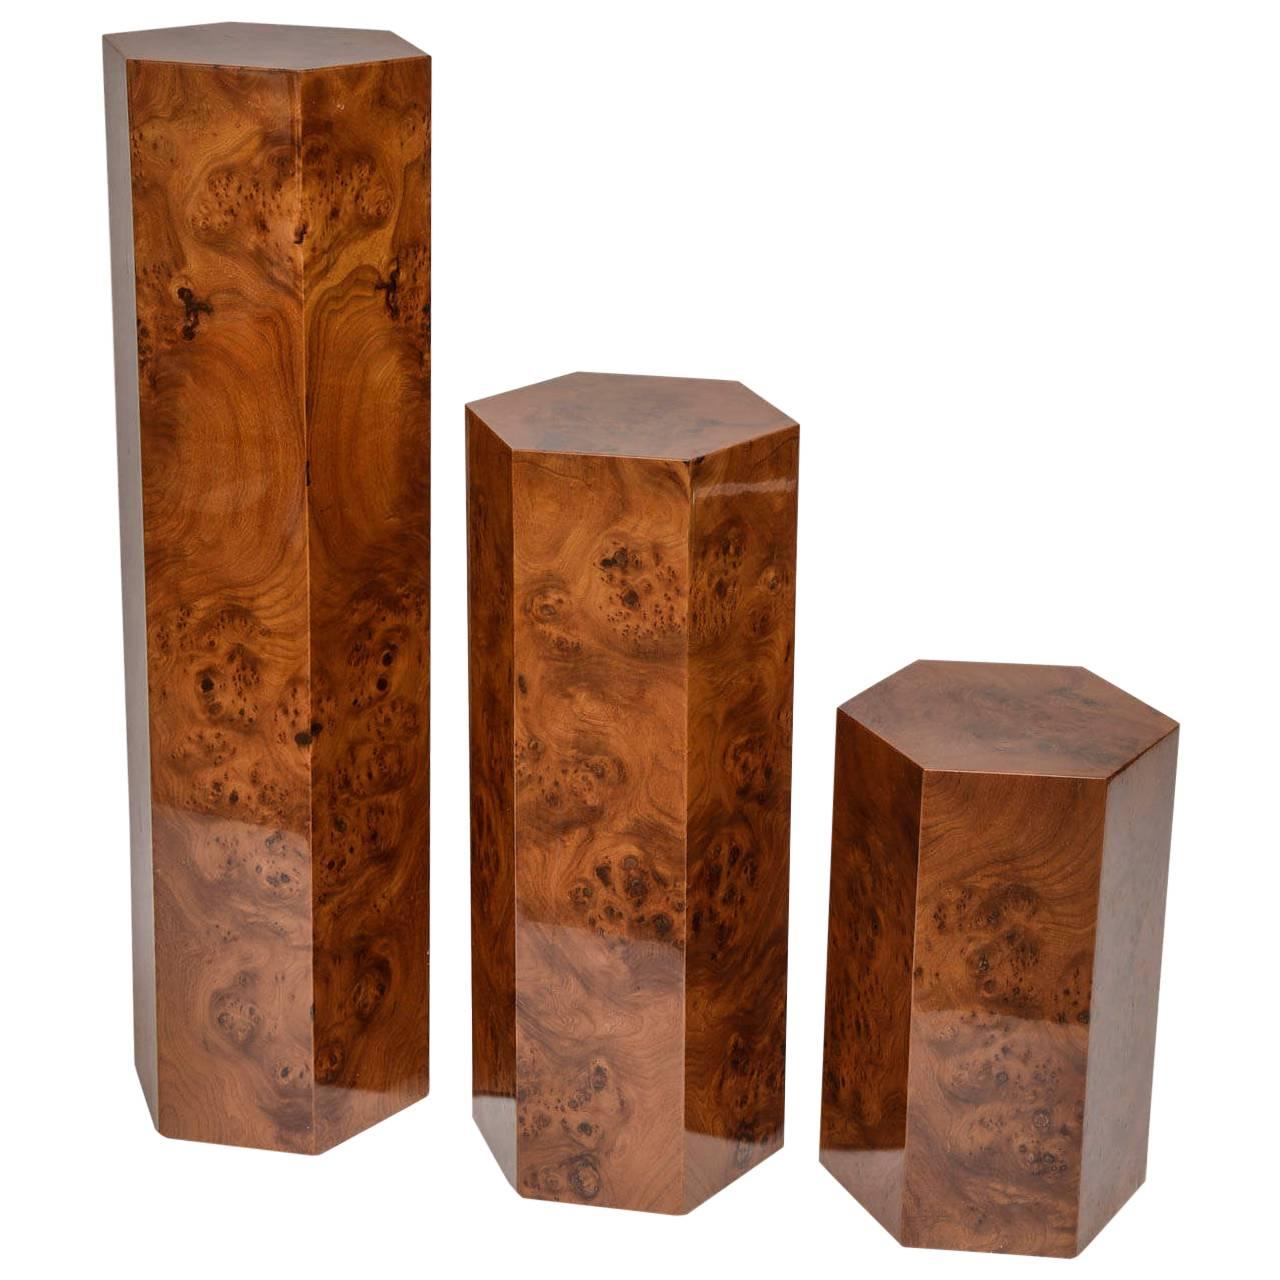 Set of Three Hexagonal Pedestals in Burl Wood